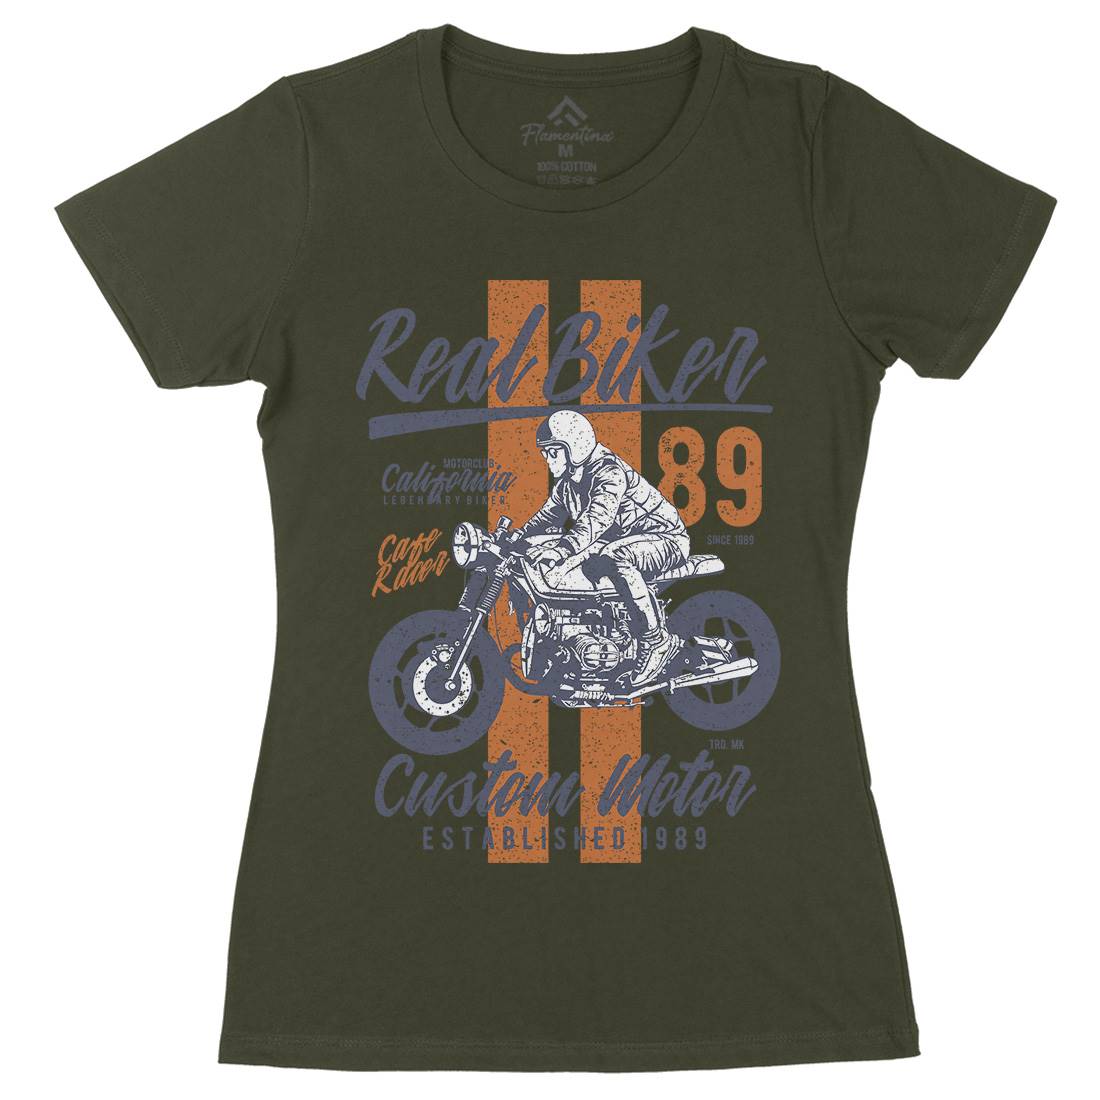 Real Biker Womens Organic Crew Neck T-Shirt Motorcycles A739